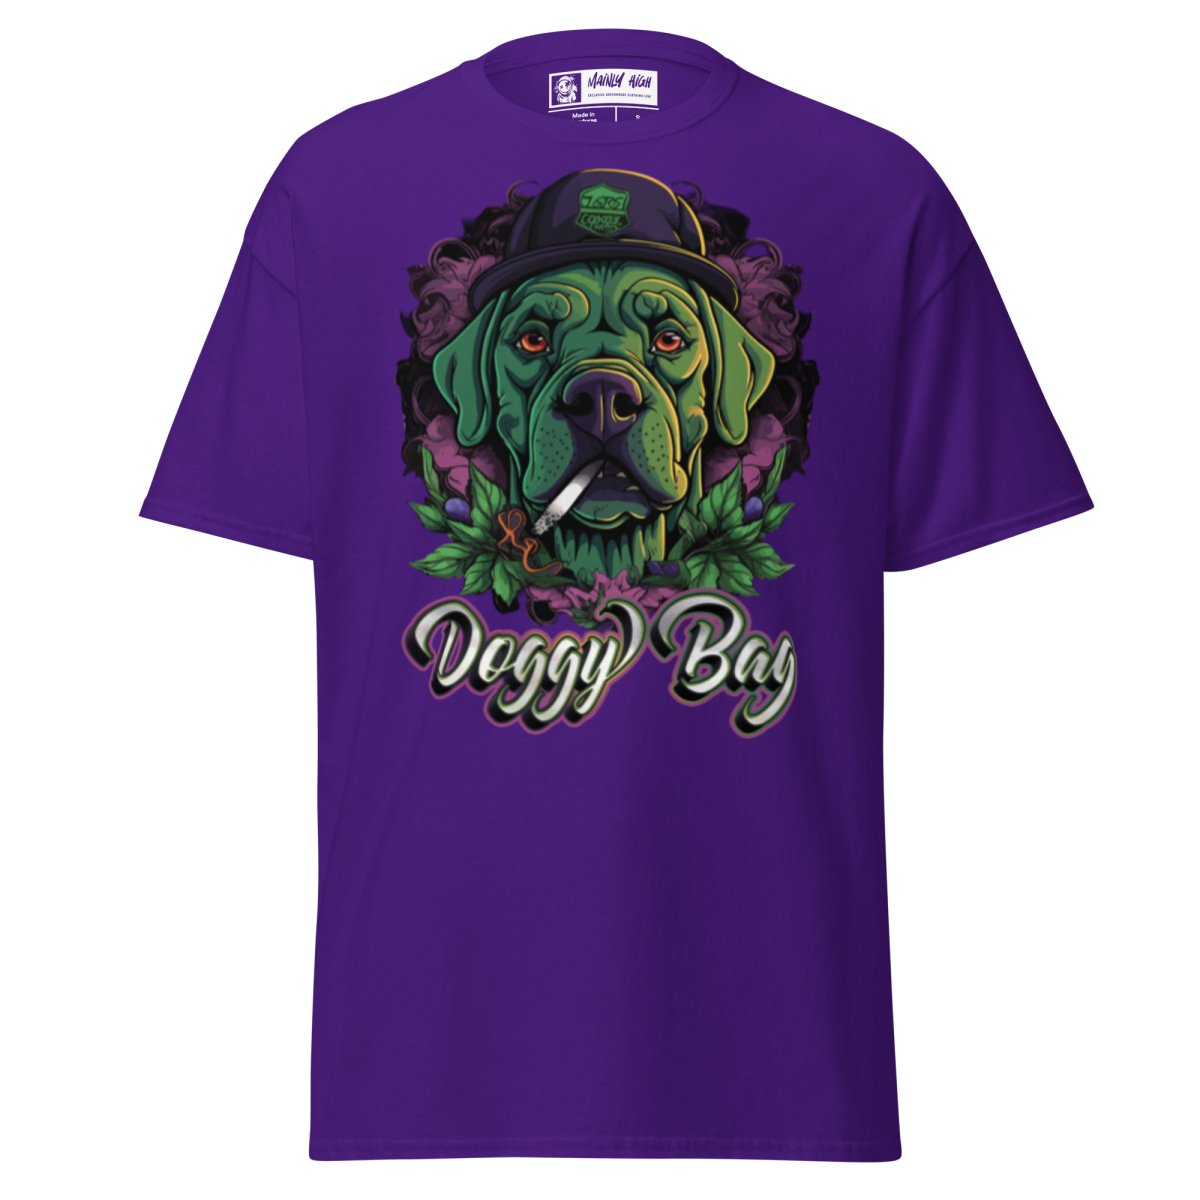 Doggy Bag T-Shirt - Mainly High